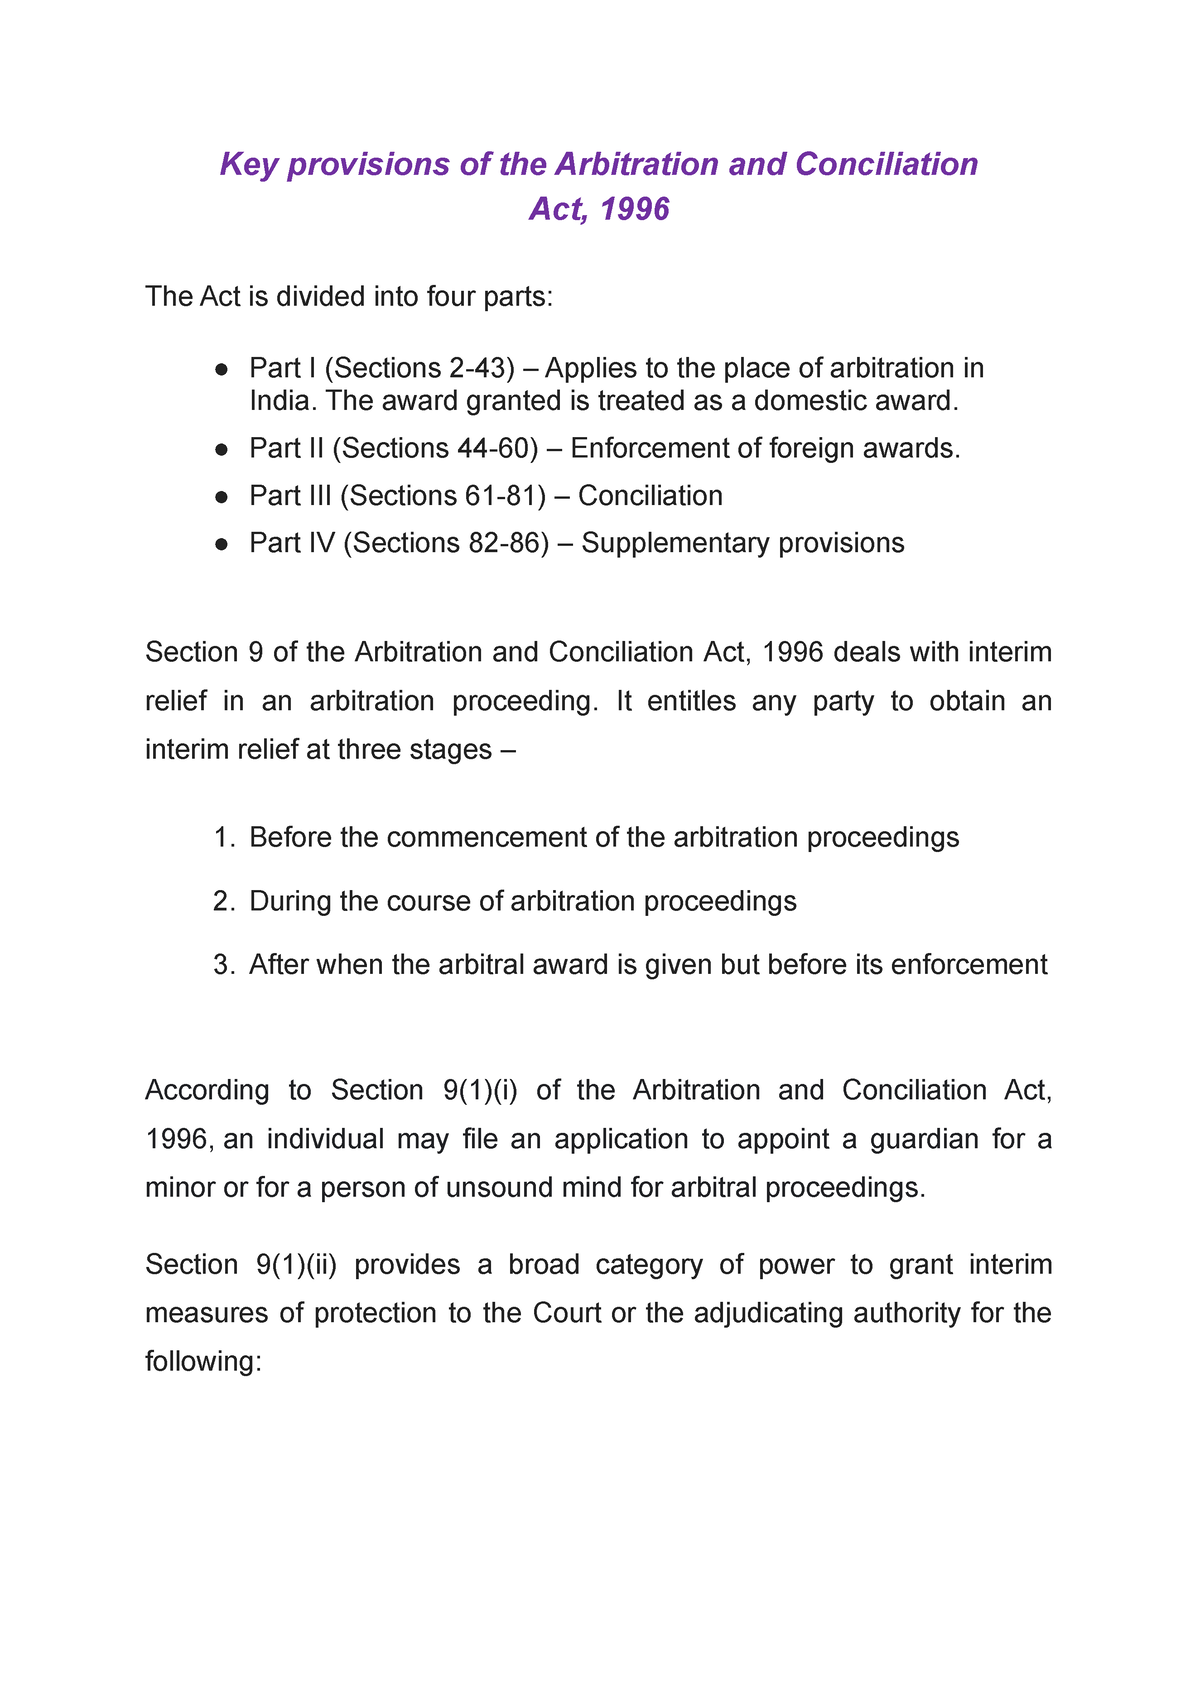 dissertation topics for arbitration